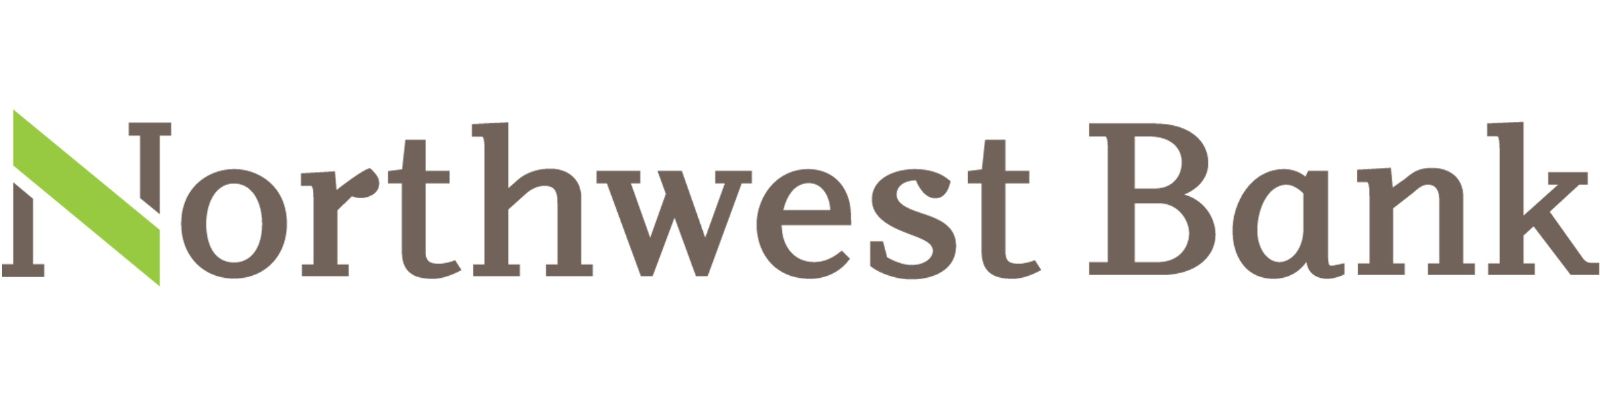 Logo for Northwest Bank